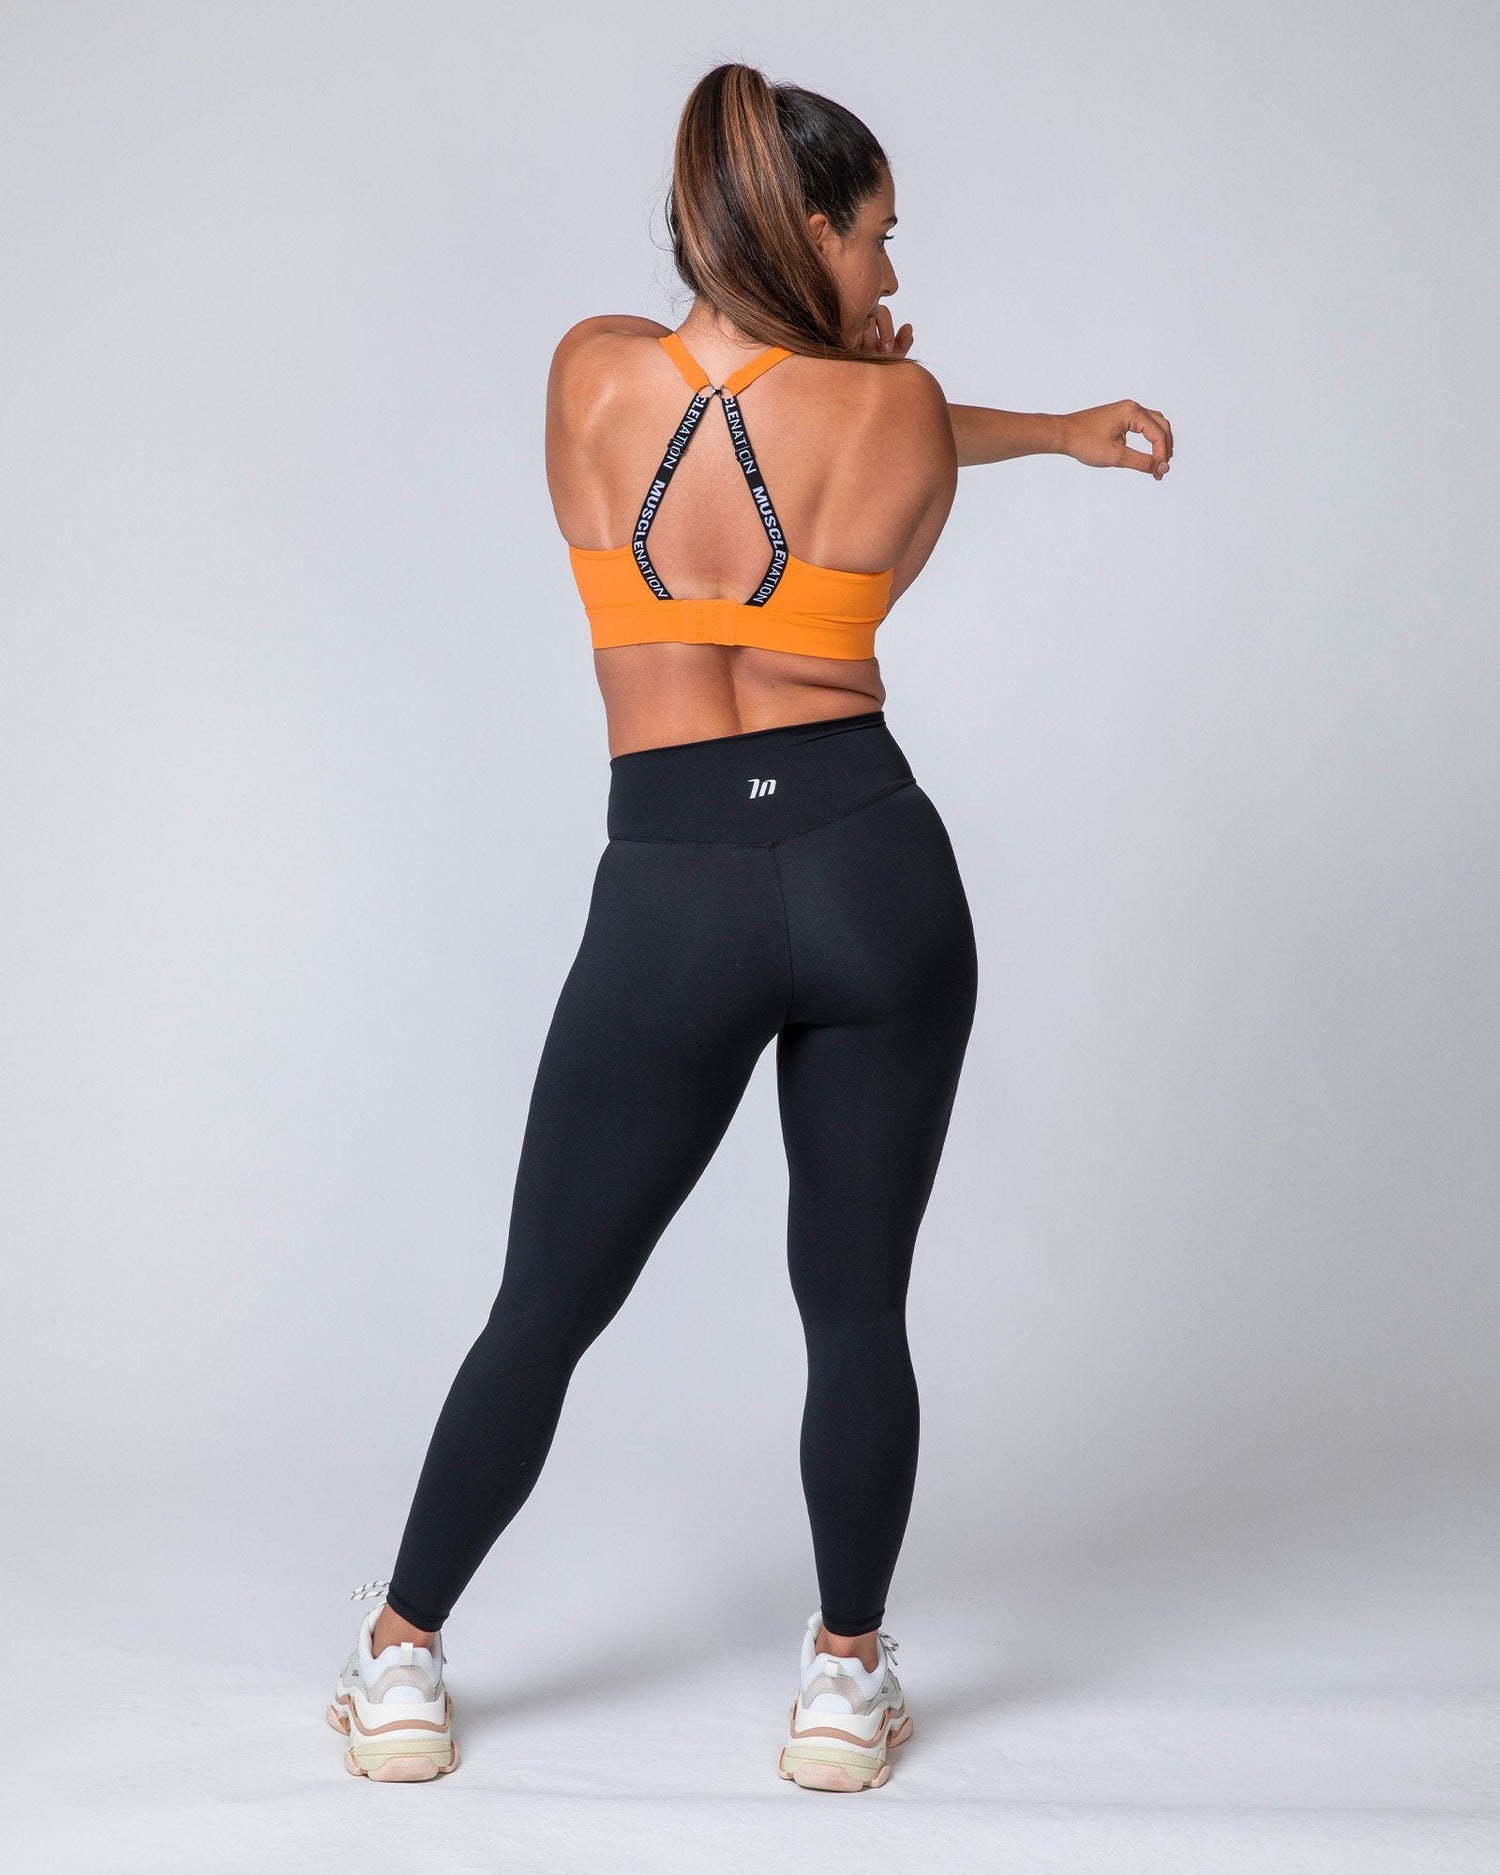 Tangerine Activewear Black Yoga Pants Womens Large  Pants for women, Black  yoga pants, Womens activewear